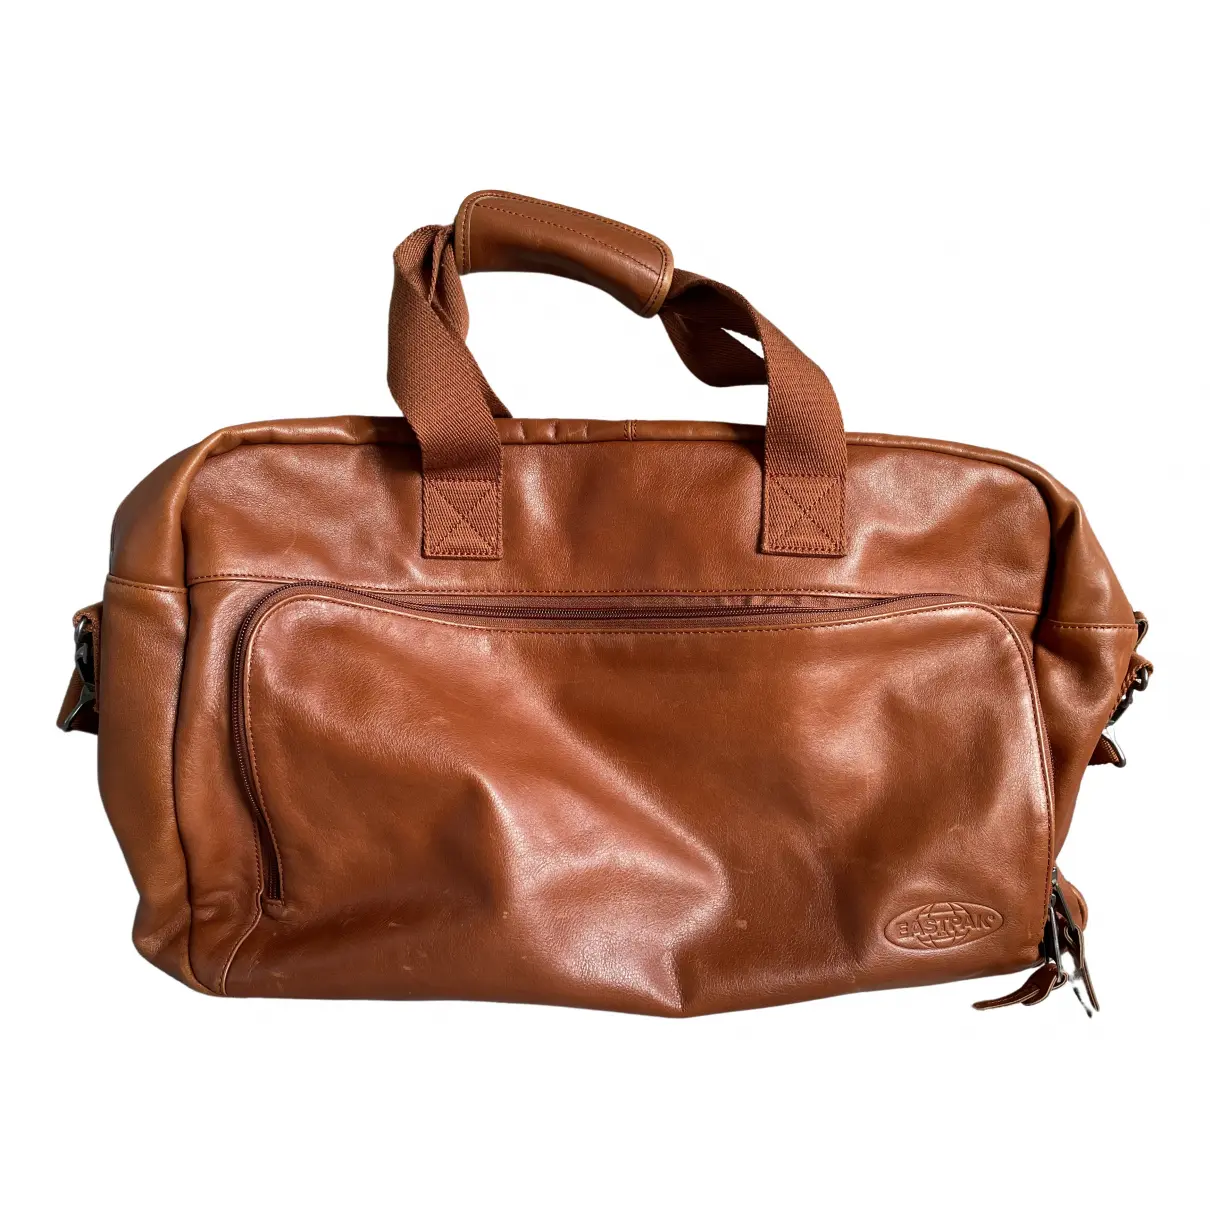 Leather weekend bag Eastpak